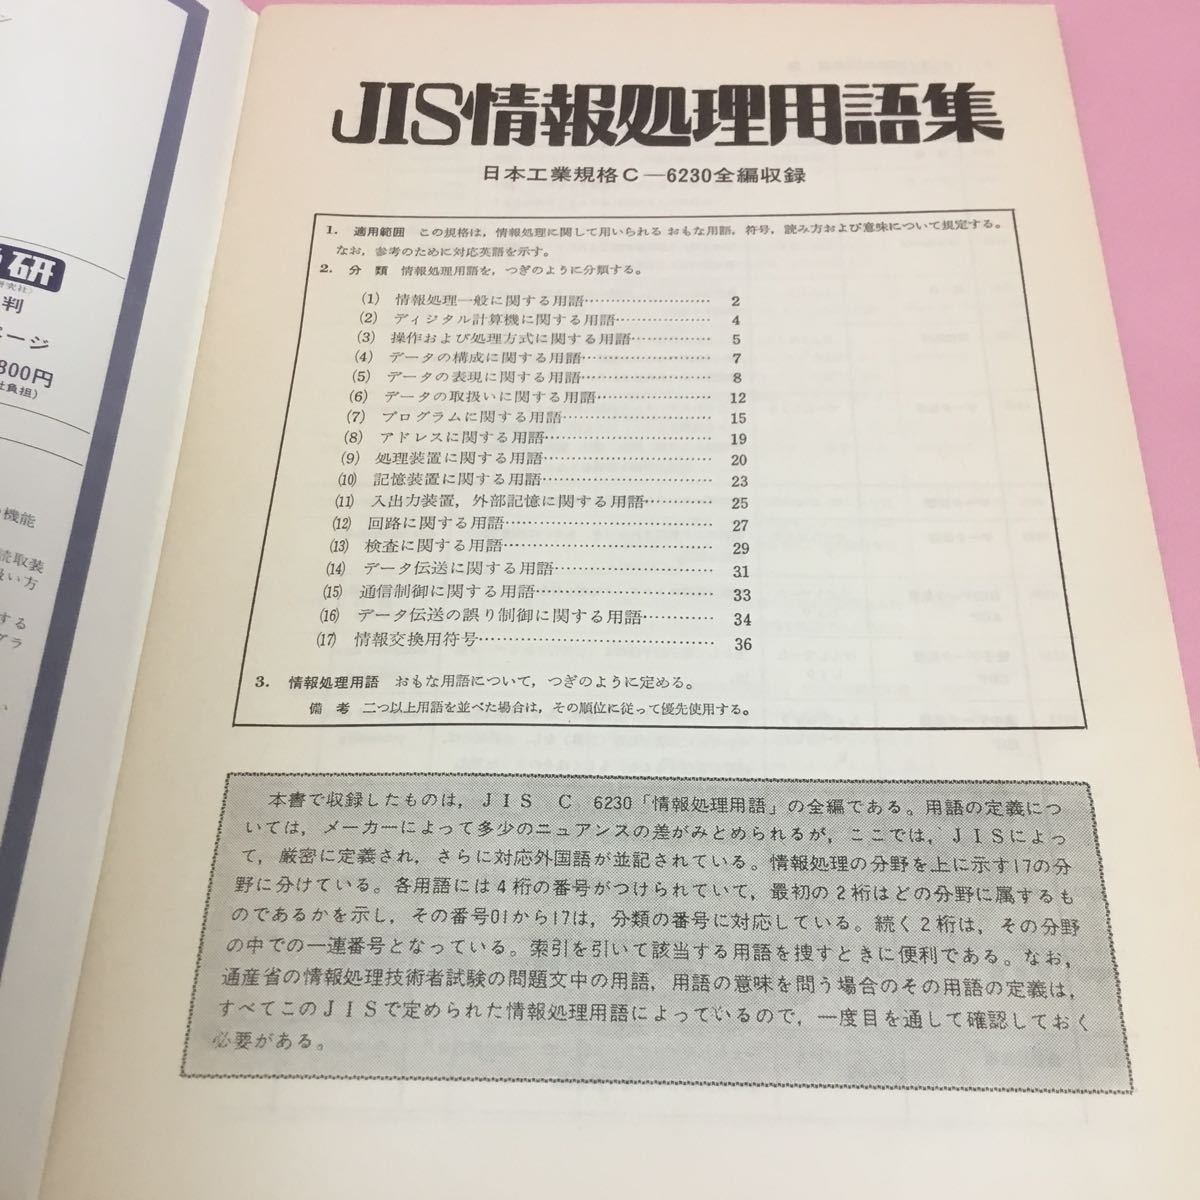 B086 JIS情報処理用語集 日本工業規格 C 6230 全編収録 学習コンピュータ6月号別冊付録 1977年 6月FACOM230-15 COBOL_画像4